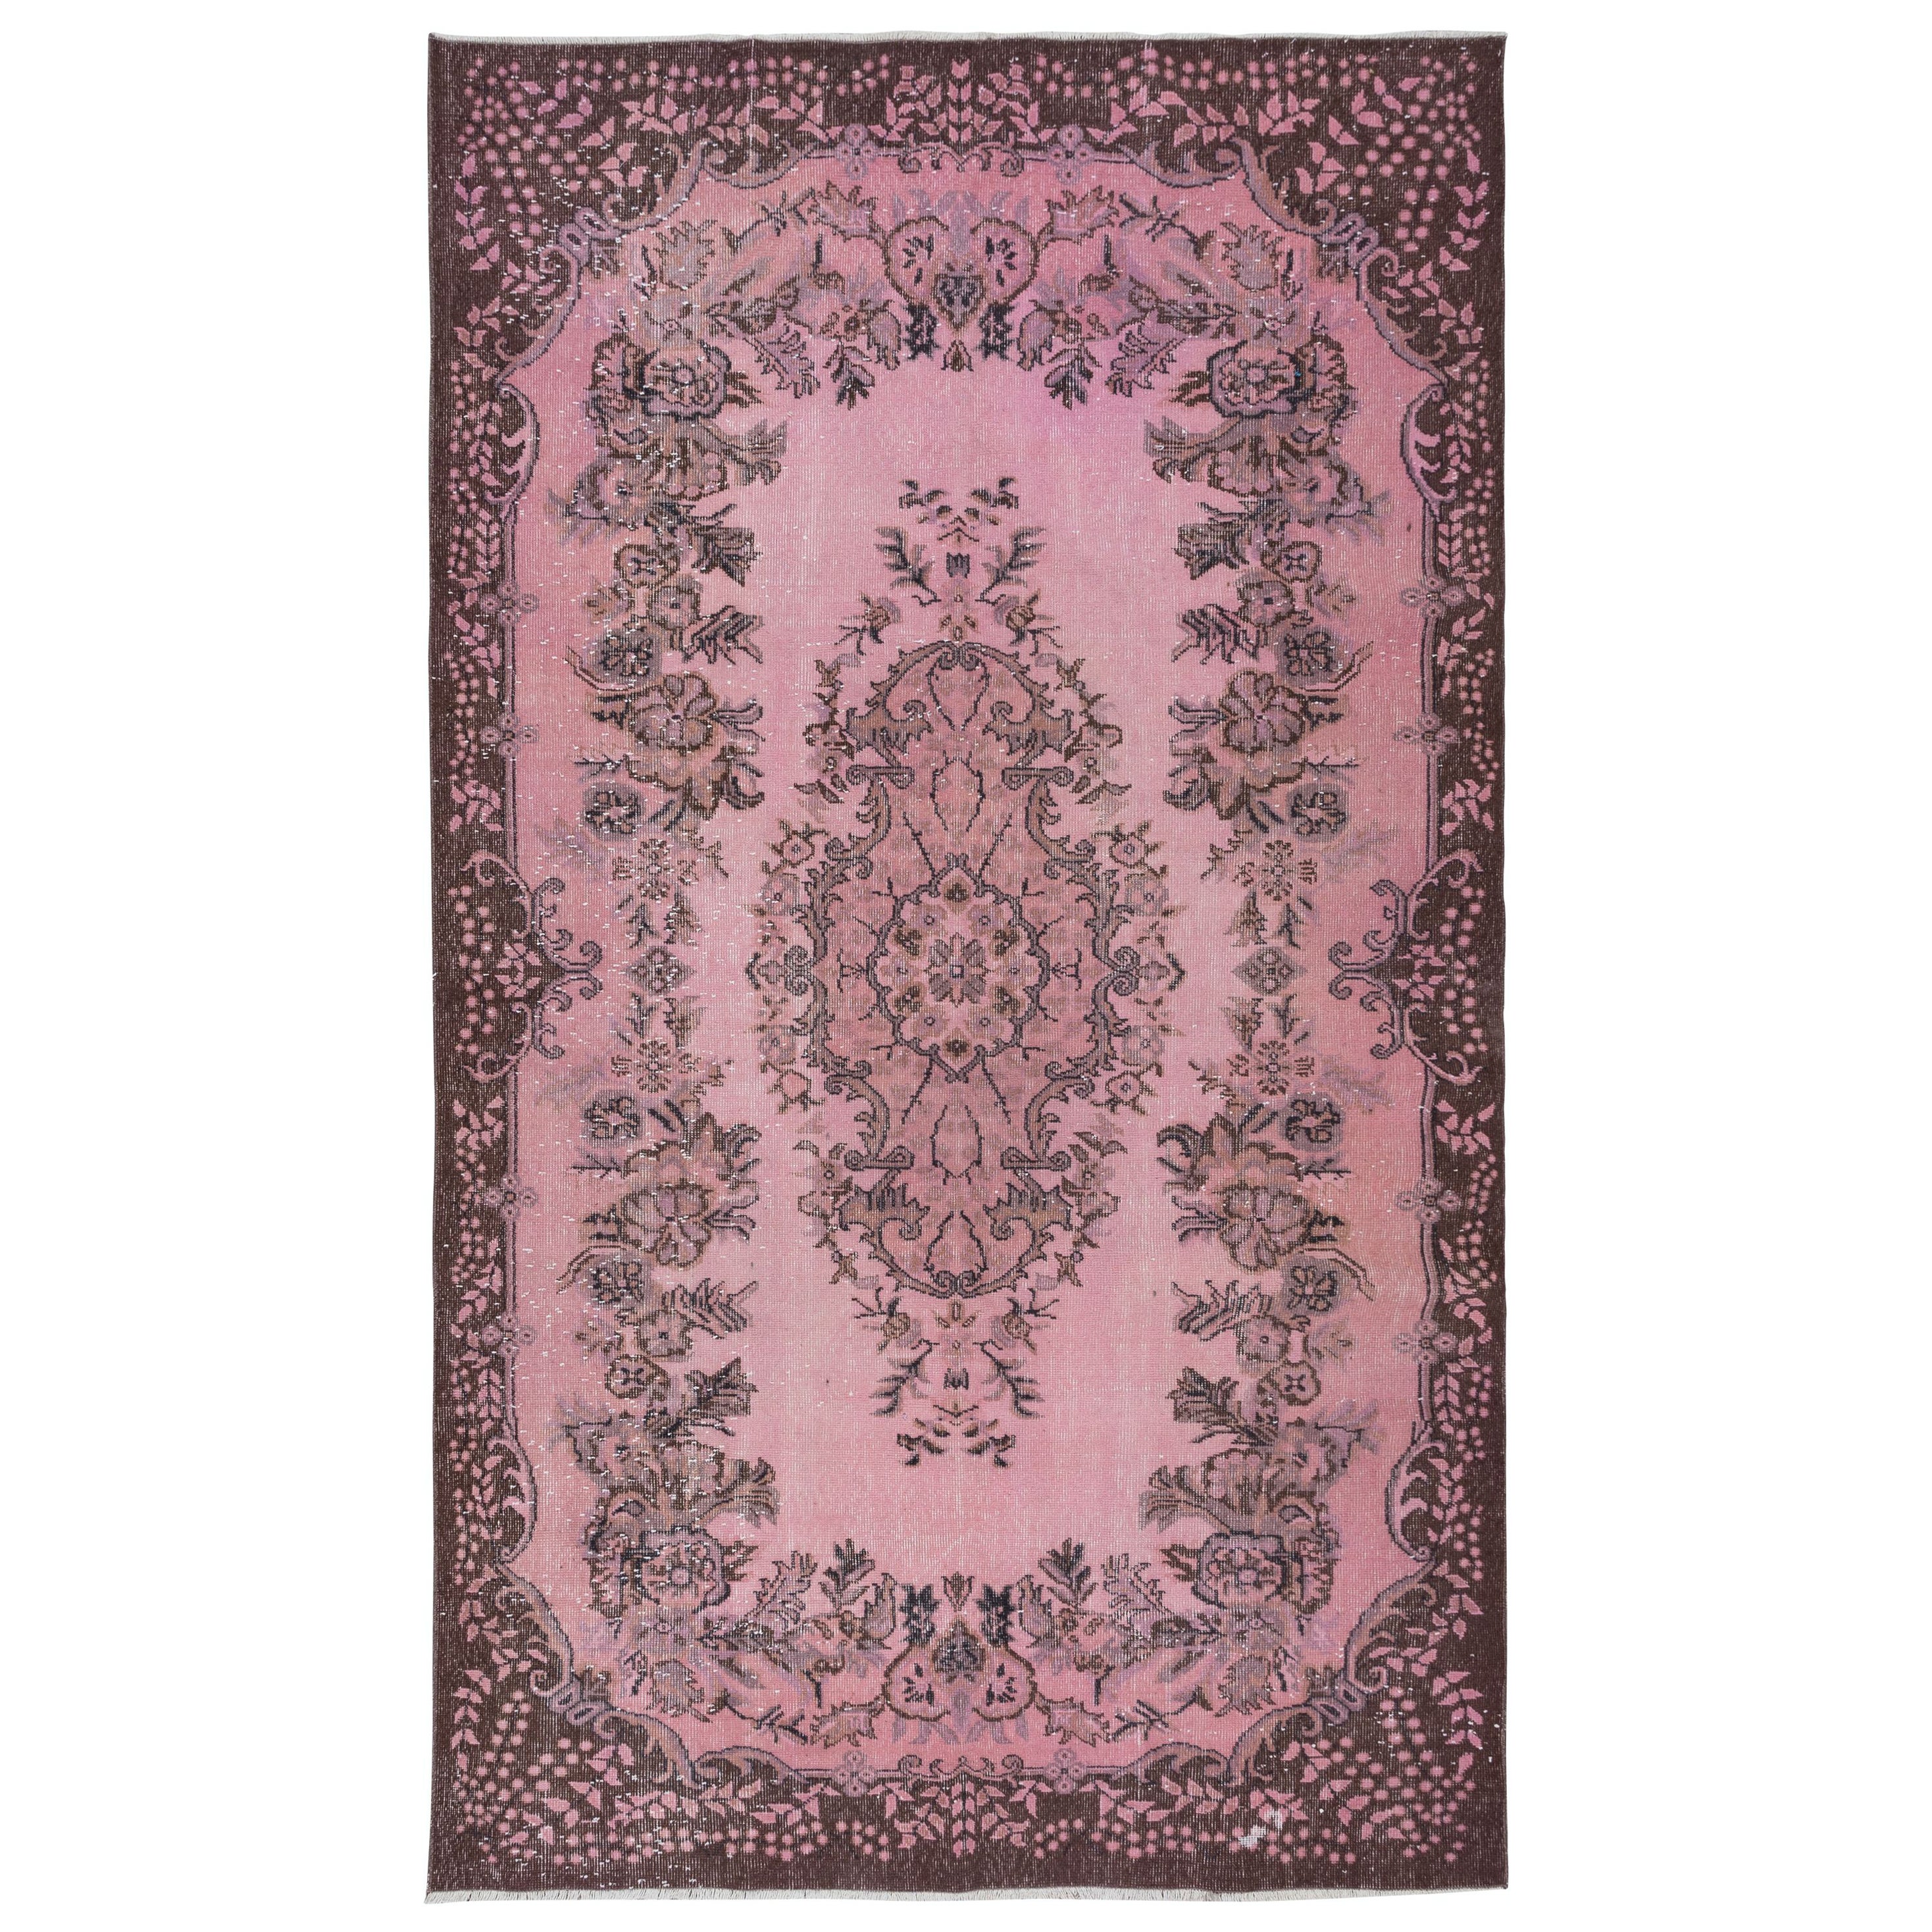 6x9.8 Ft Pink Area Rug for Modern Interiors, Handmade Turkish Carpet (tapis turc fait à la main)